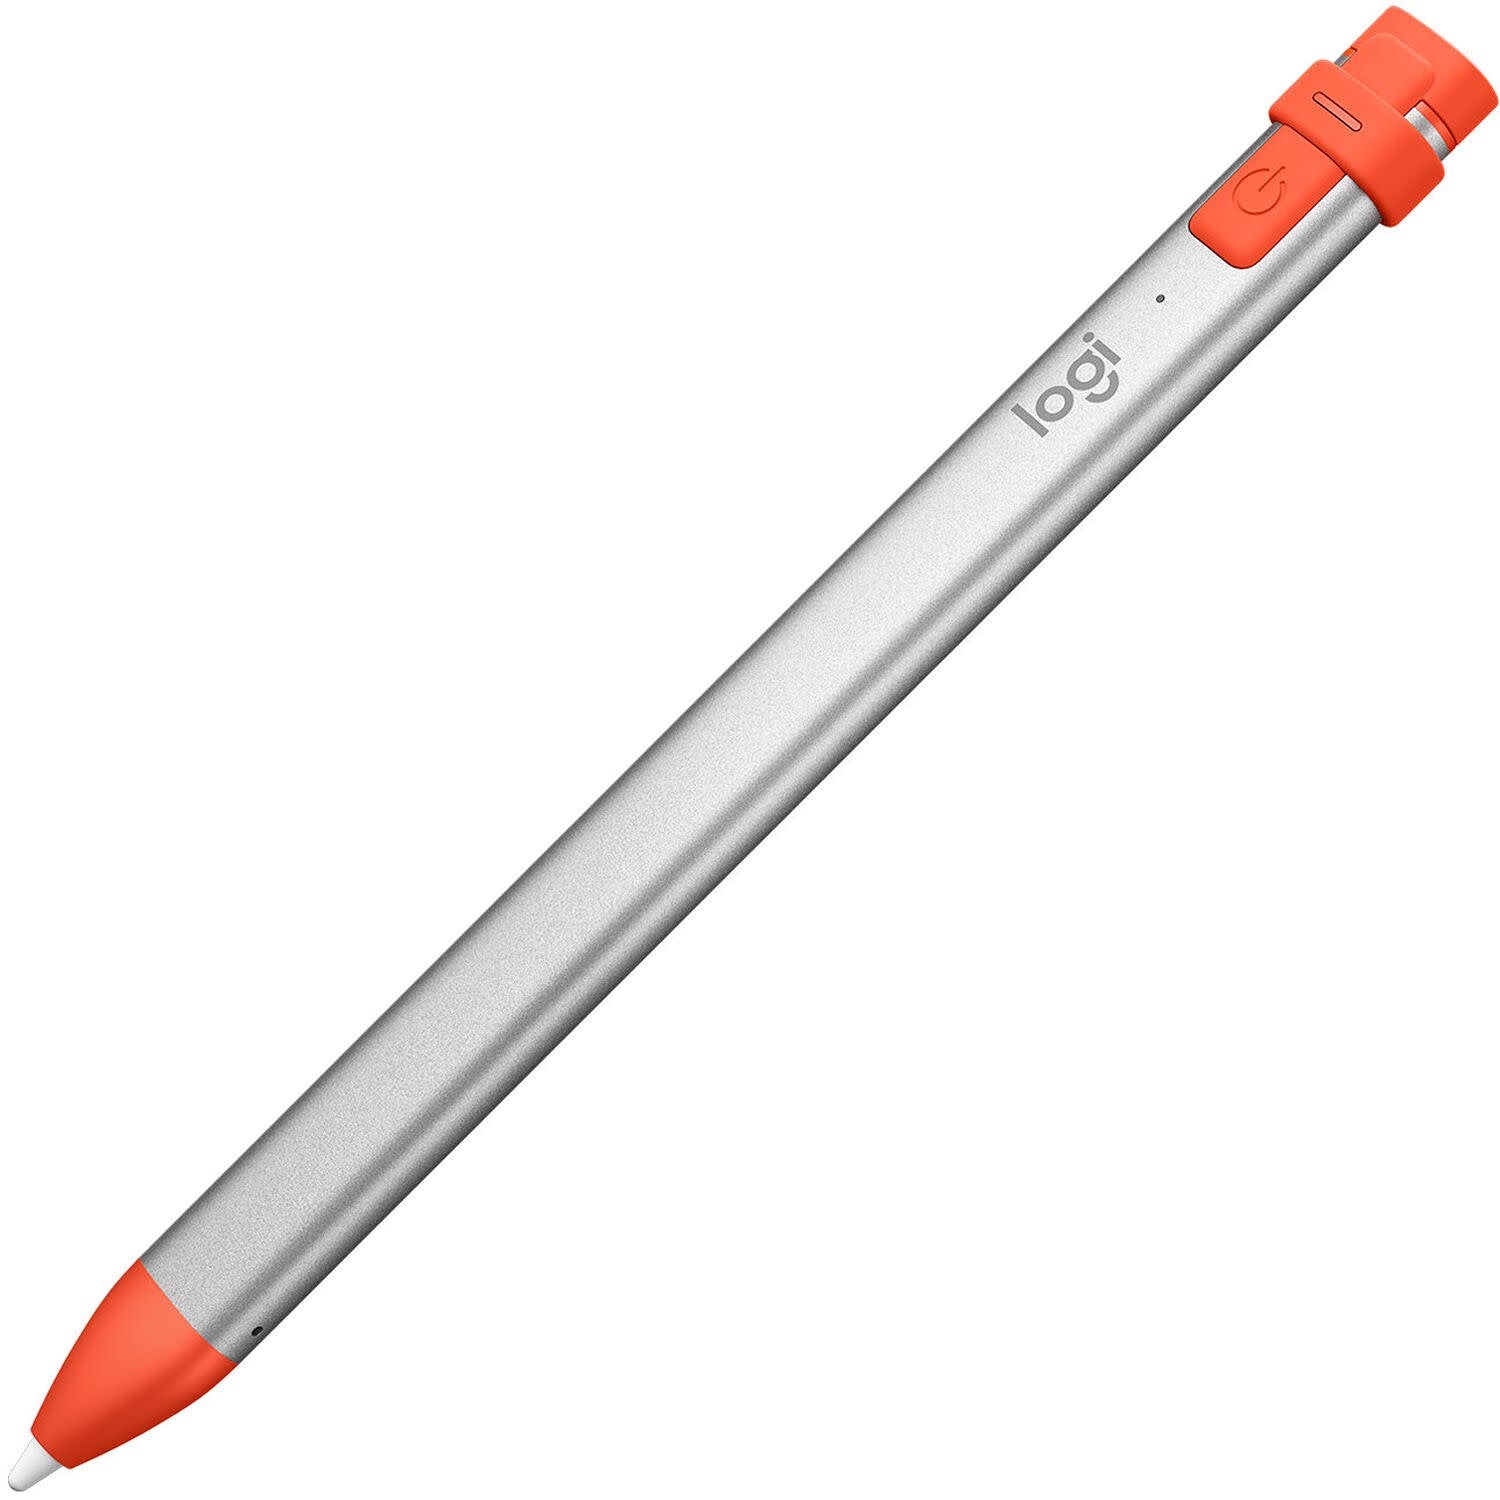 Logitech Crayon Pixel-Precise Digital Pencil for iPad, Orange